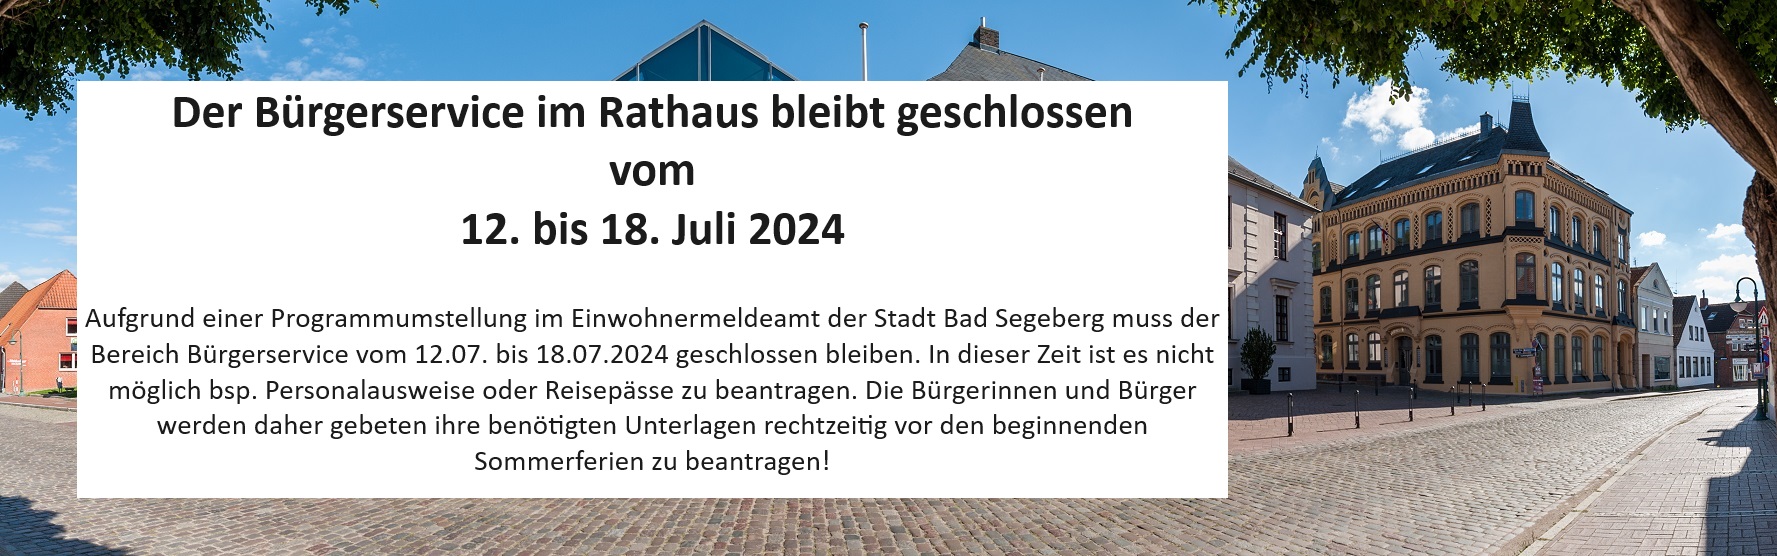 2016_08_Rathaus_banner